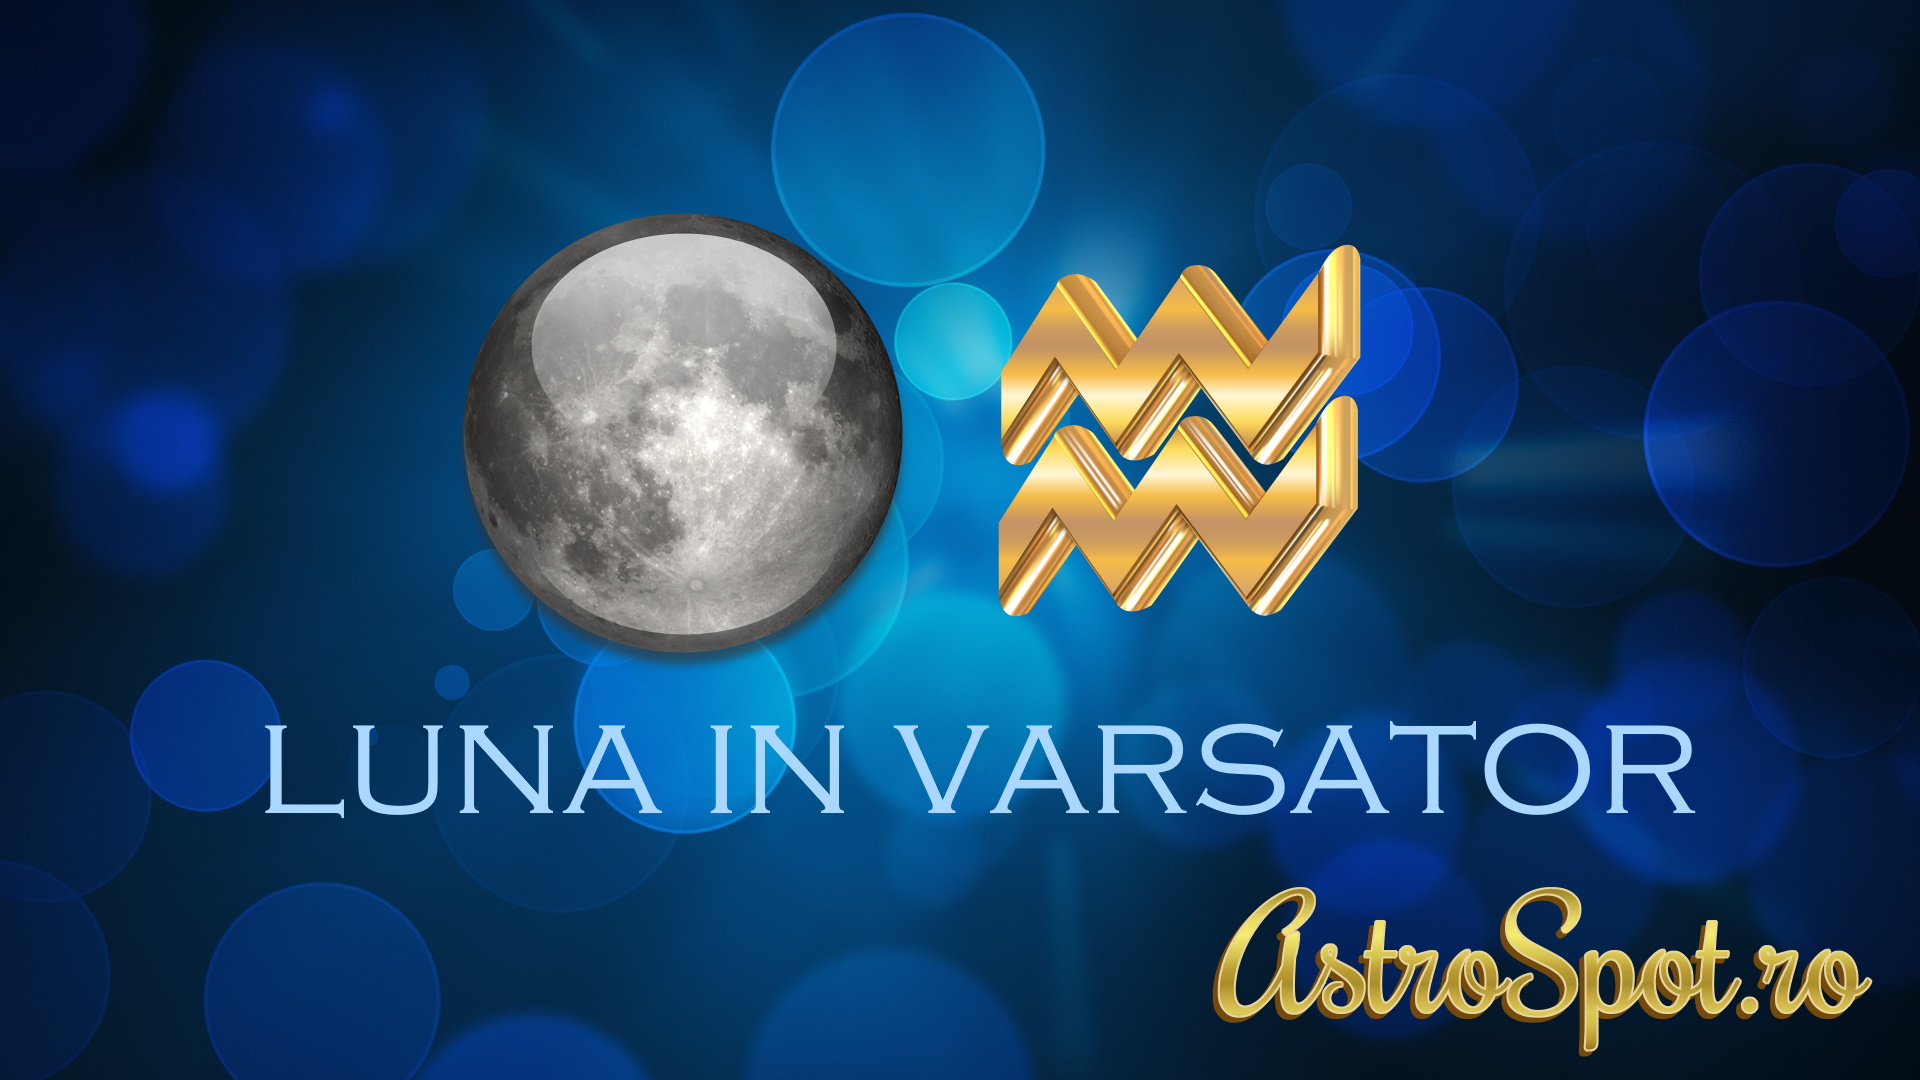 Luna in Varsator